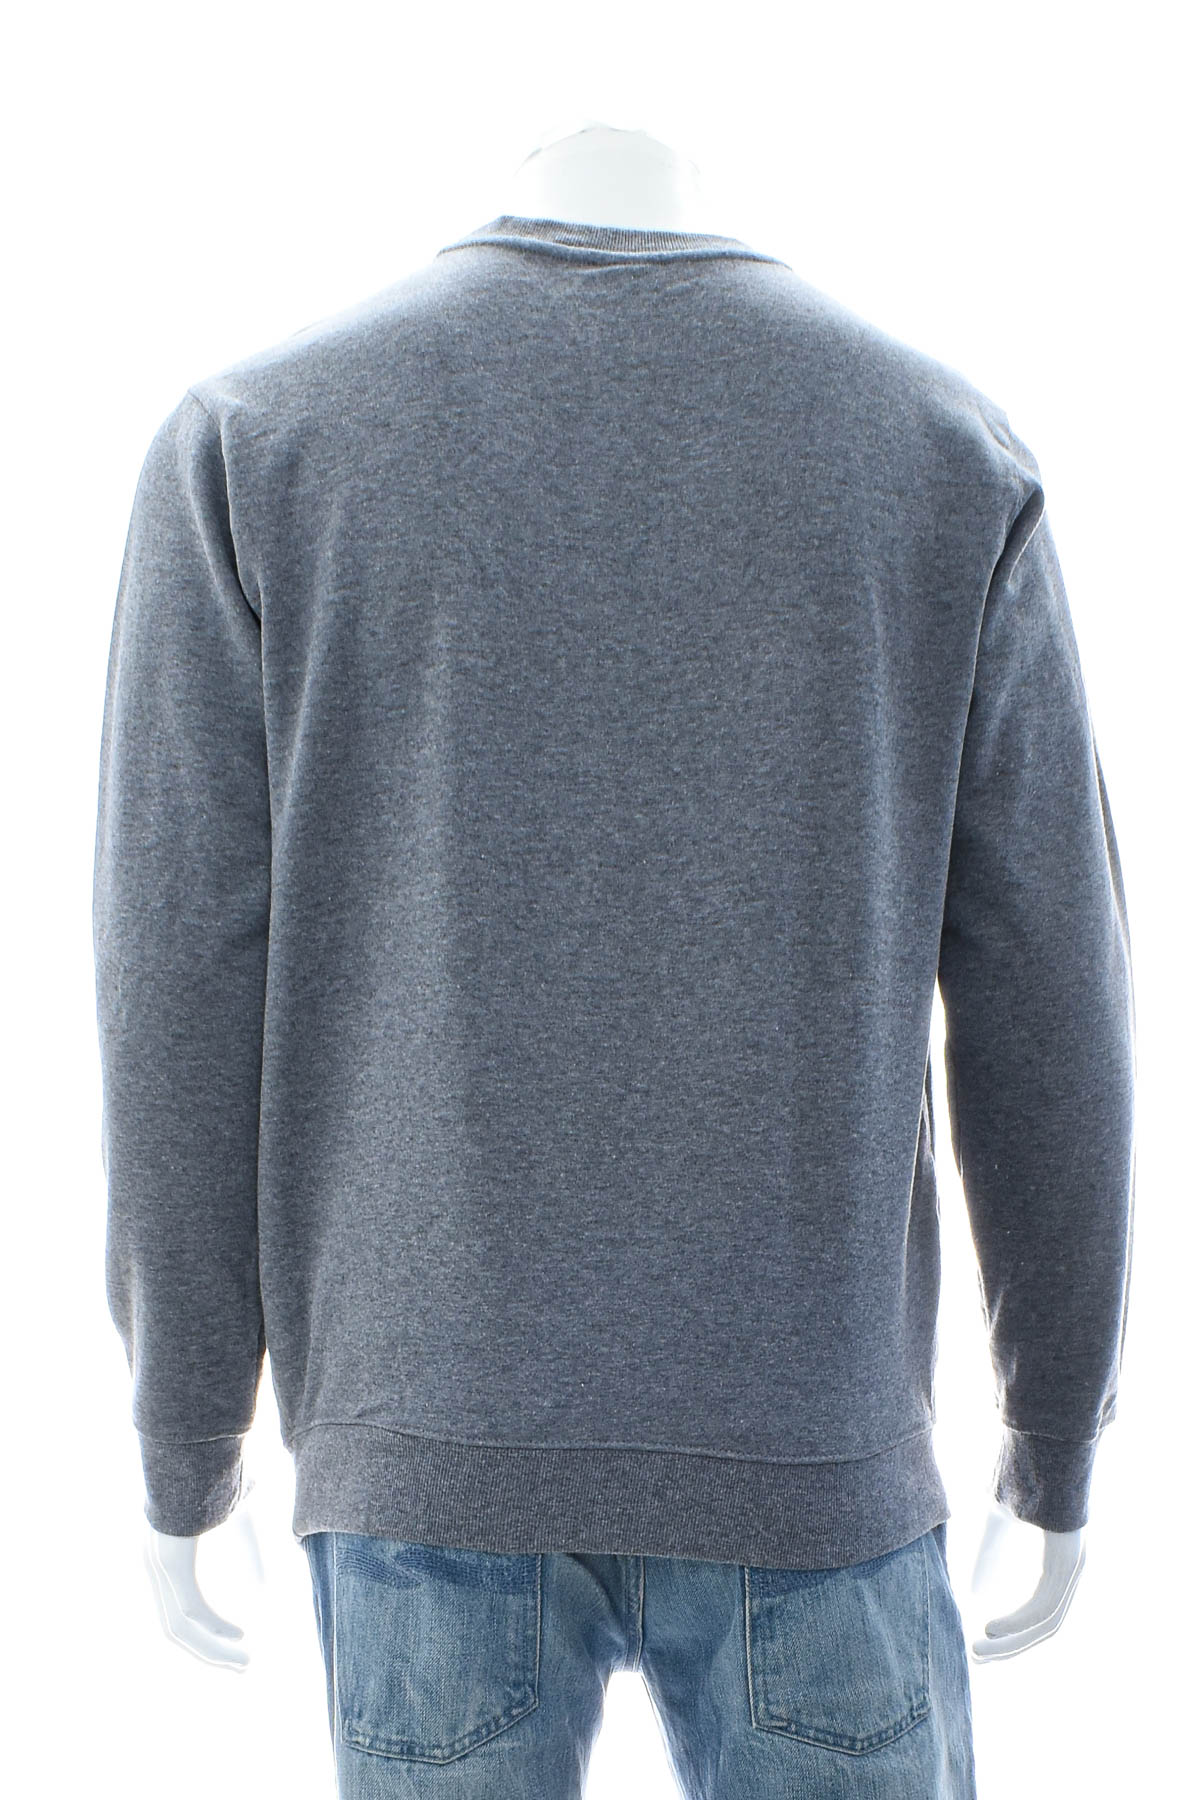 Men's sweater - EVERLAST - 1